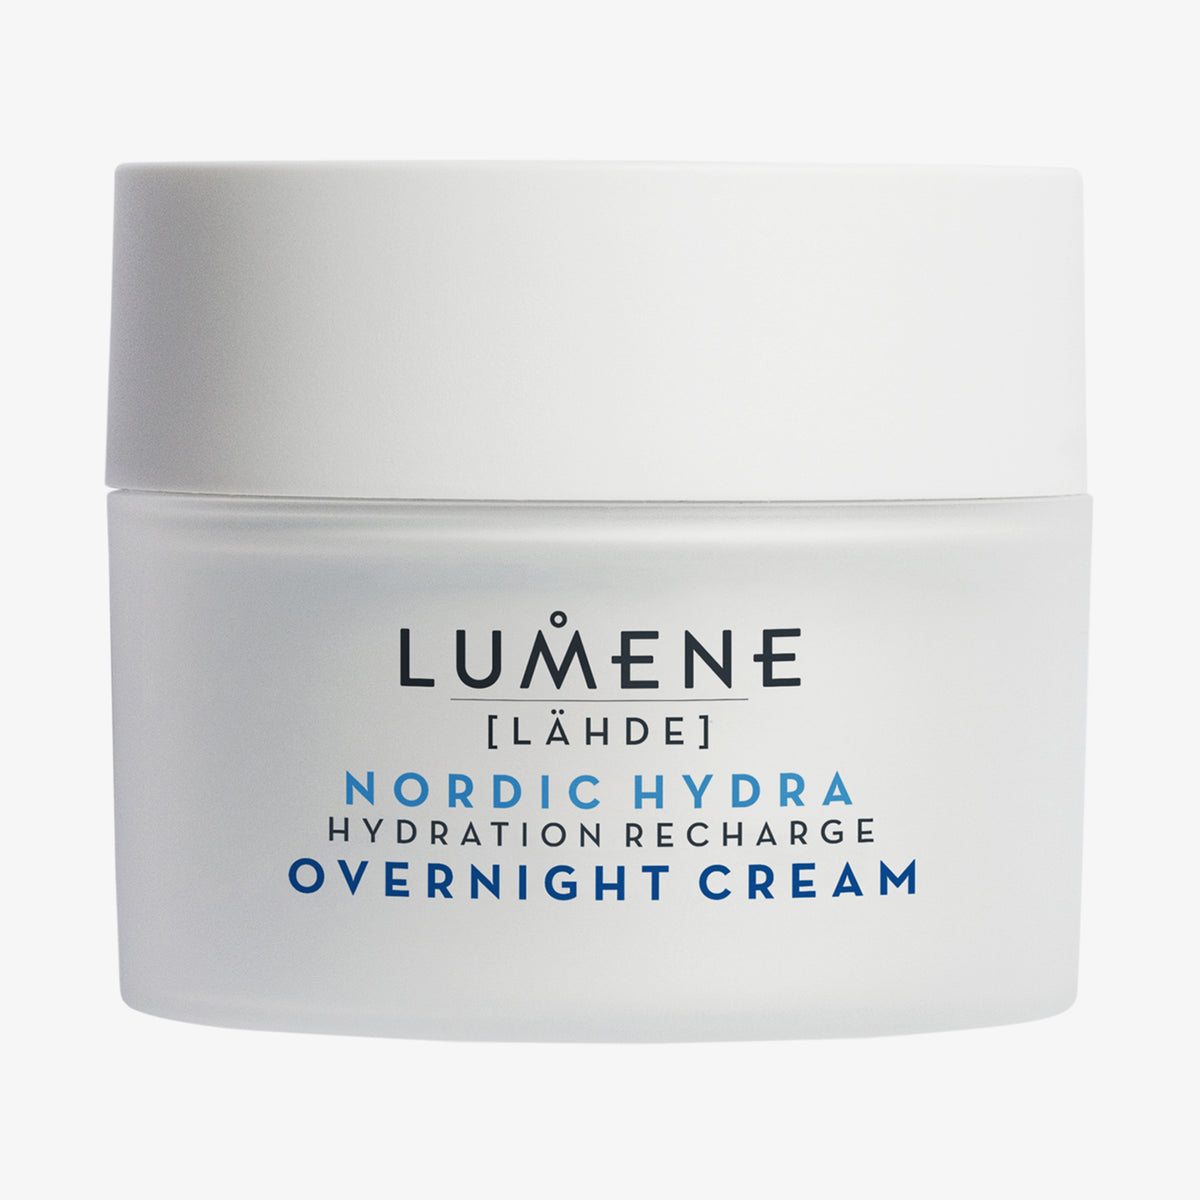 Lumene | NORDIC HYDRA [LAHDE] Hydration Recharge Overnight Cream